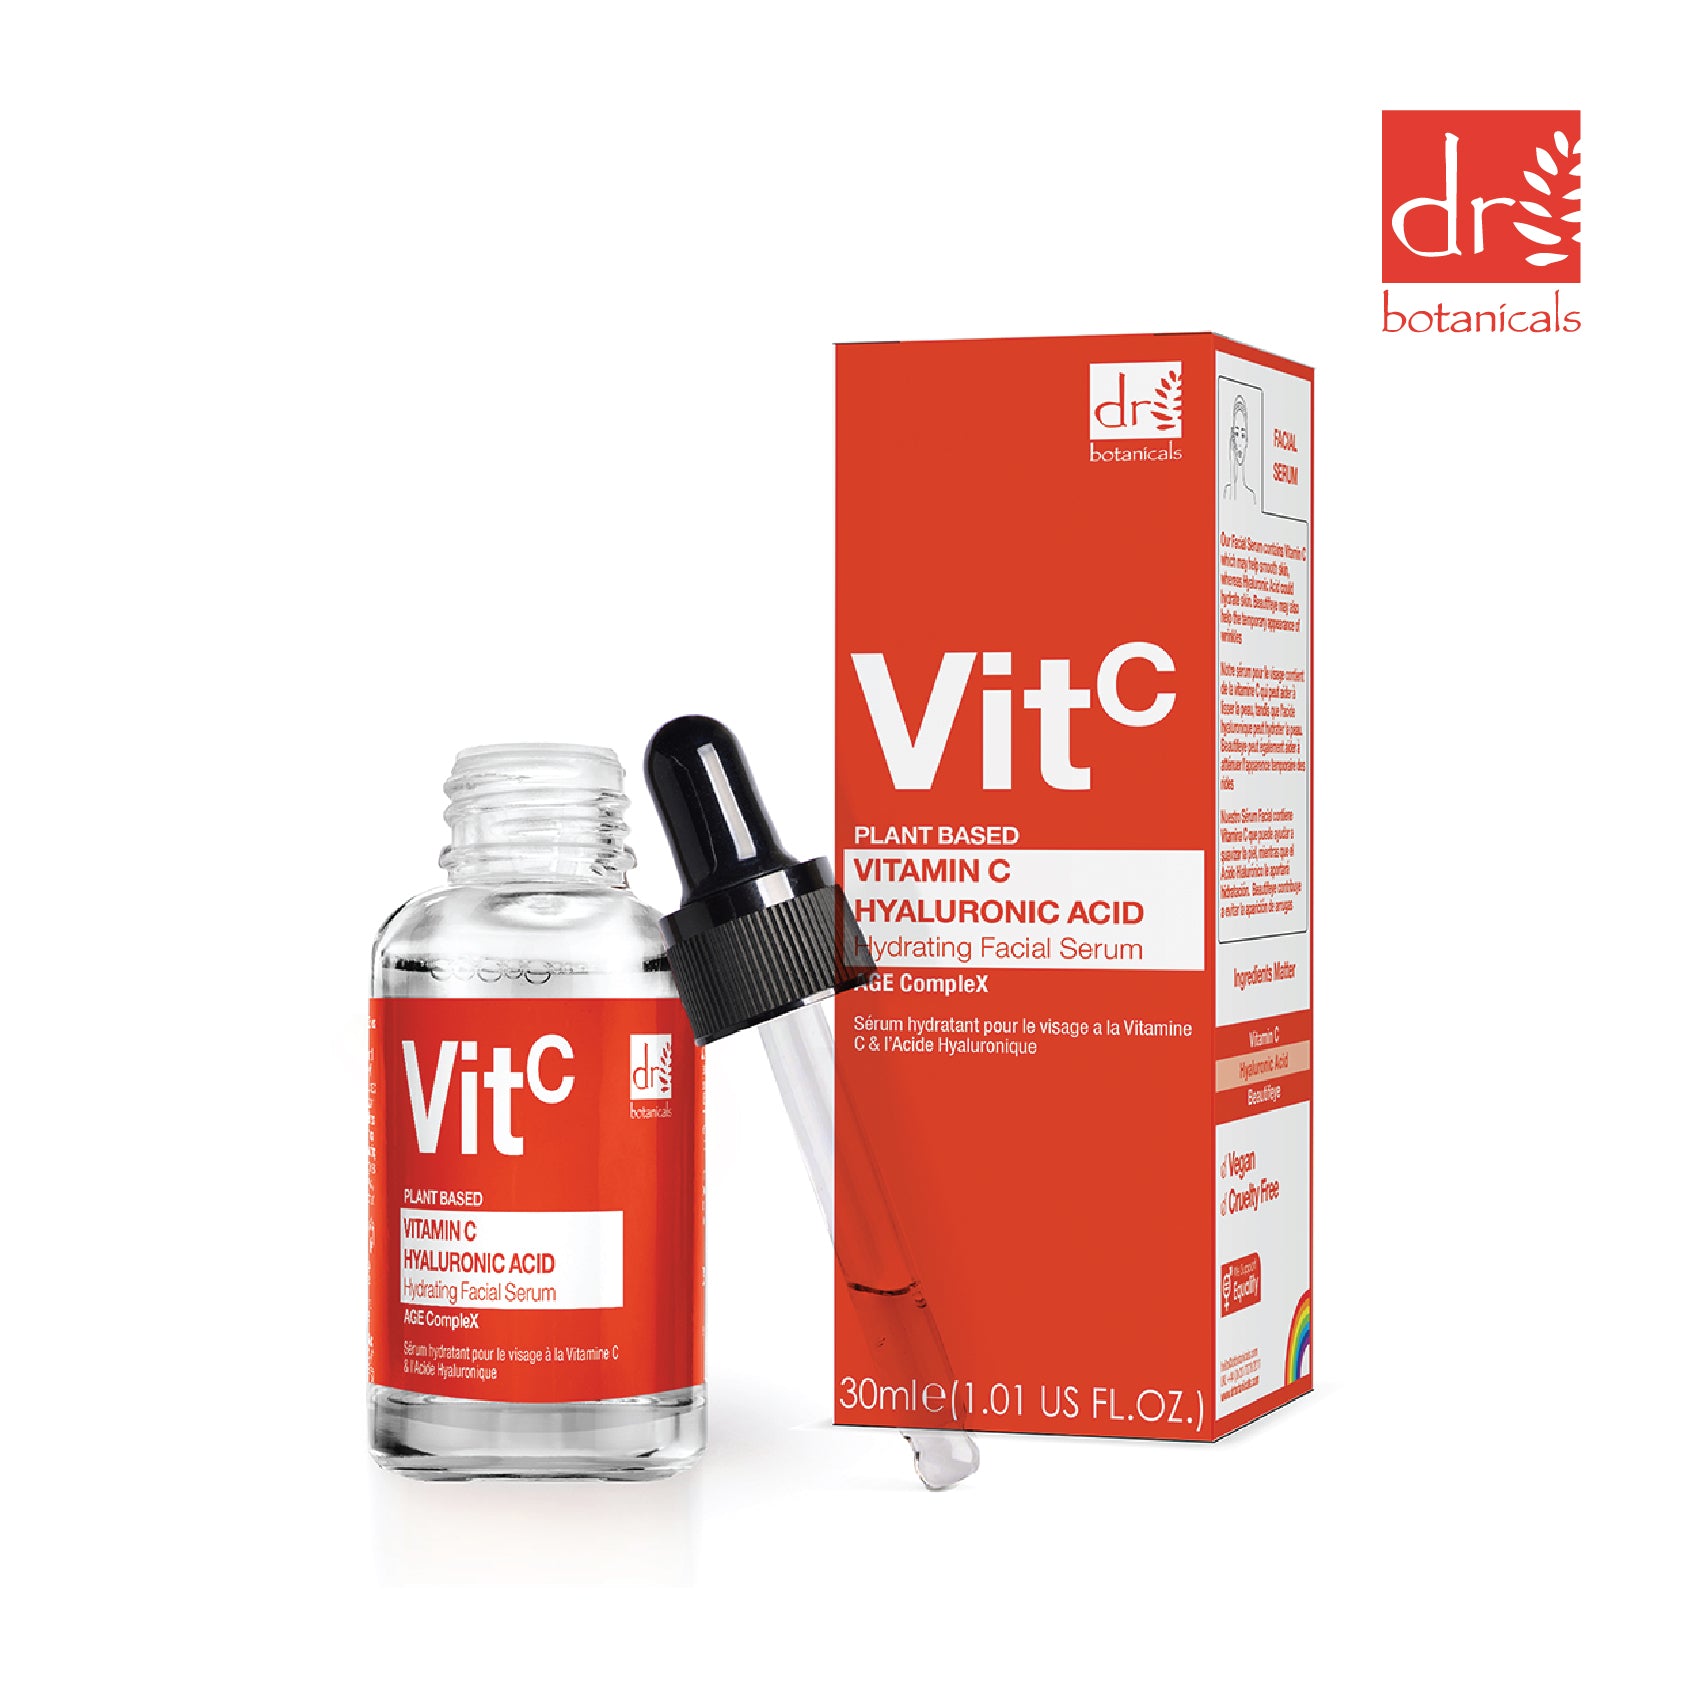 Vitamin C & Hyaluronic Acid Anti-ageing Facial Serum 30ml + Vitamin C & Vitamin E Brightening Anti-ageing Duo Moisturiser 60ml